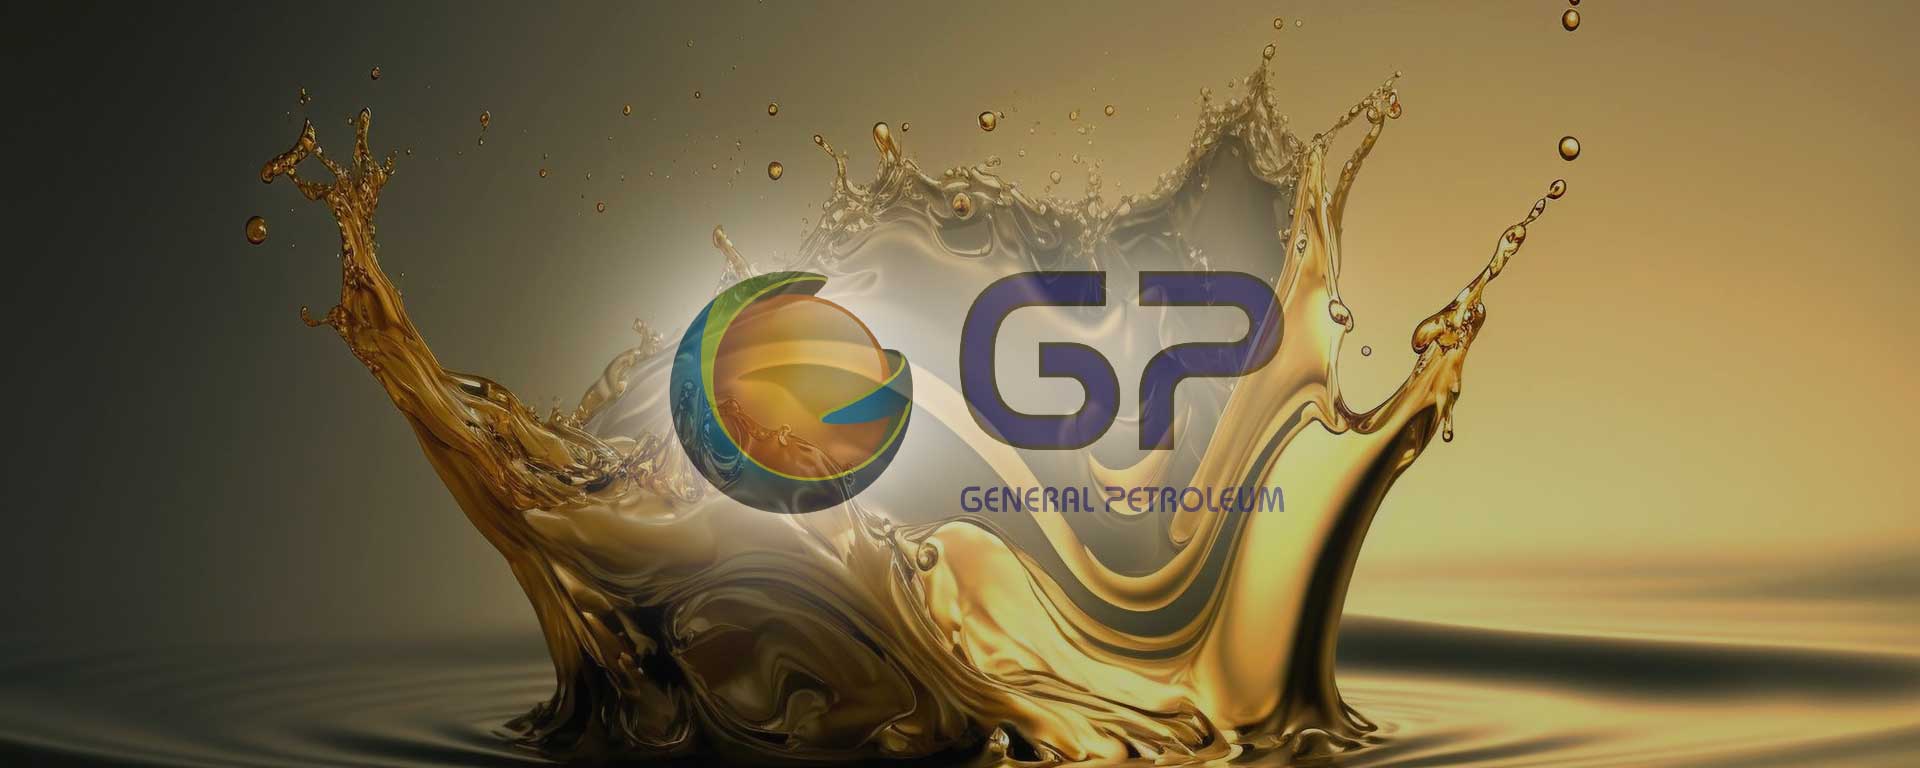 general-petroleum-gp-lubricant-supplier-in-uae-bavaria-equipment-trading-llc-banner